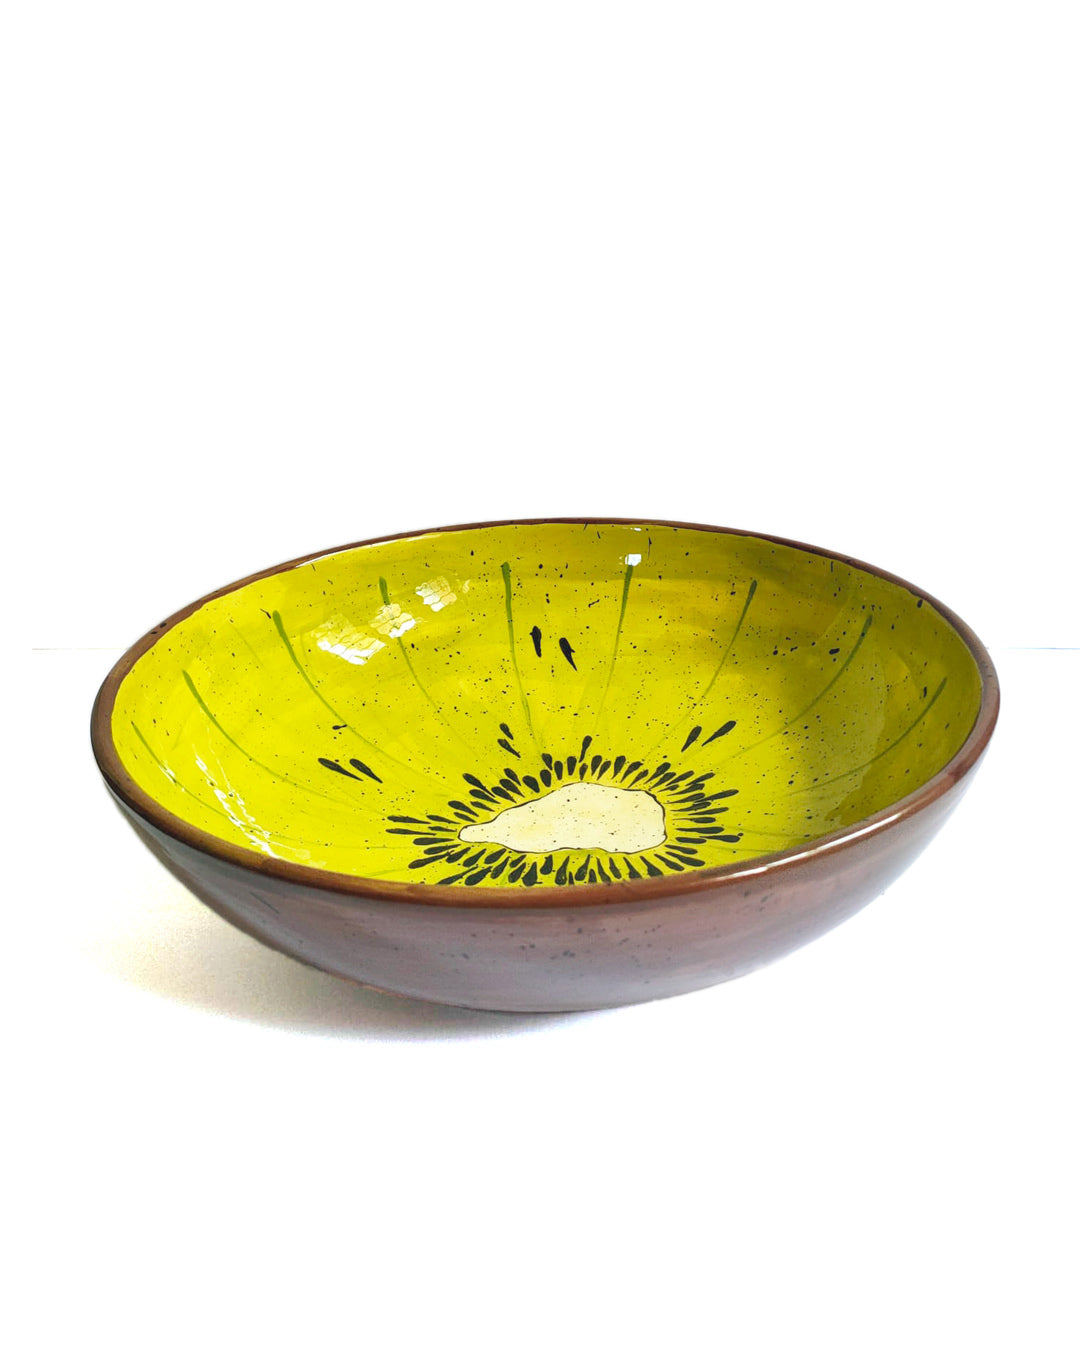 Handmade ceramic kiwi fruit bowl - Federica Massimi